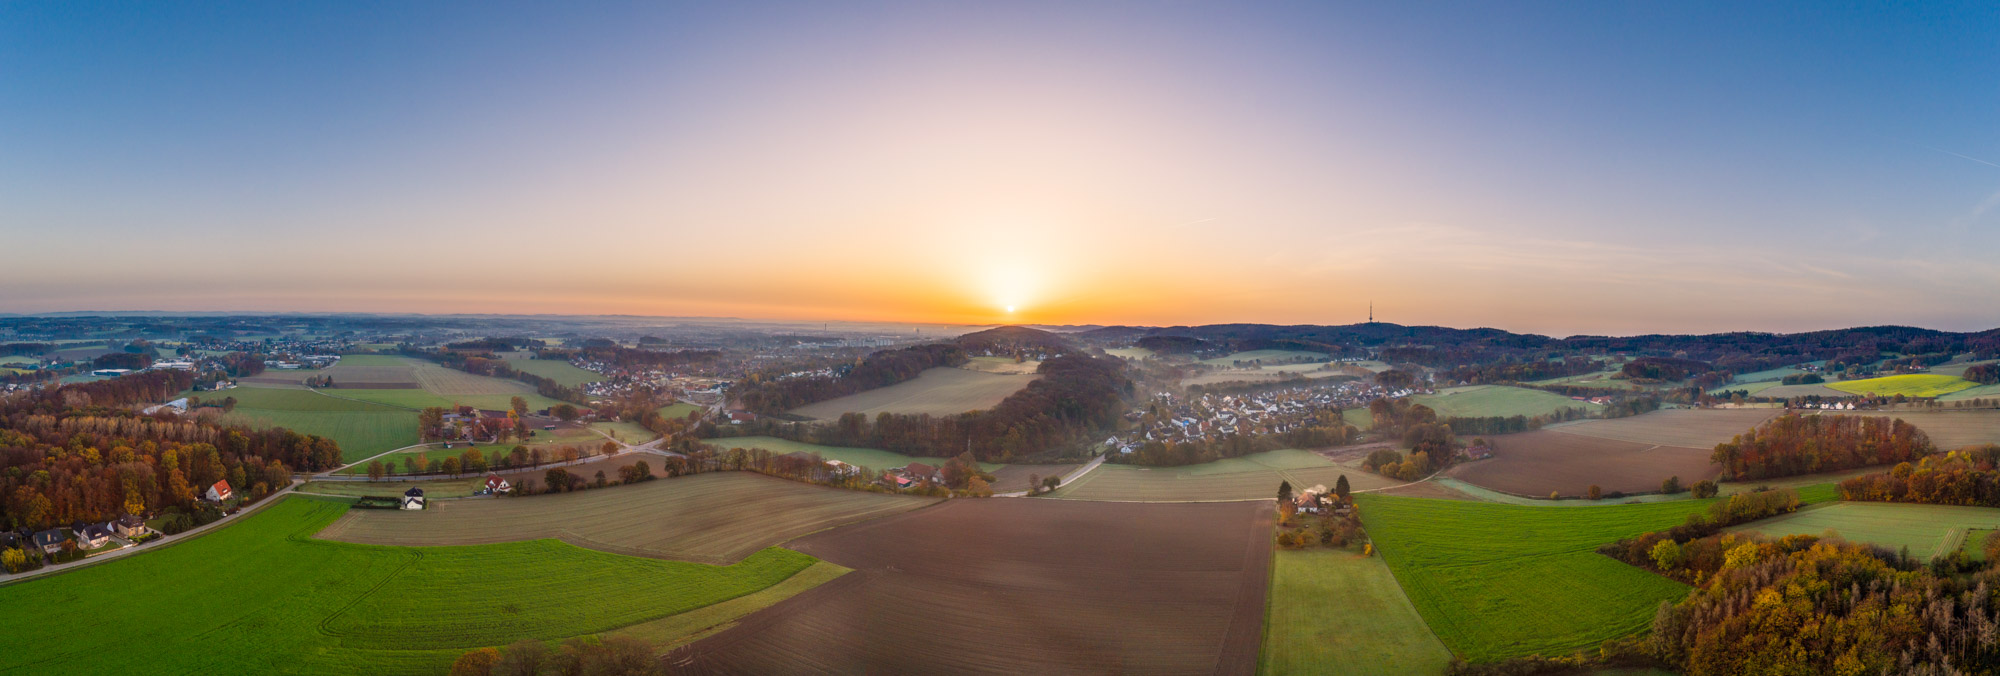 Landscape at sunrise in November 2020 (Bielefeld-Hoberge, Germany).